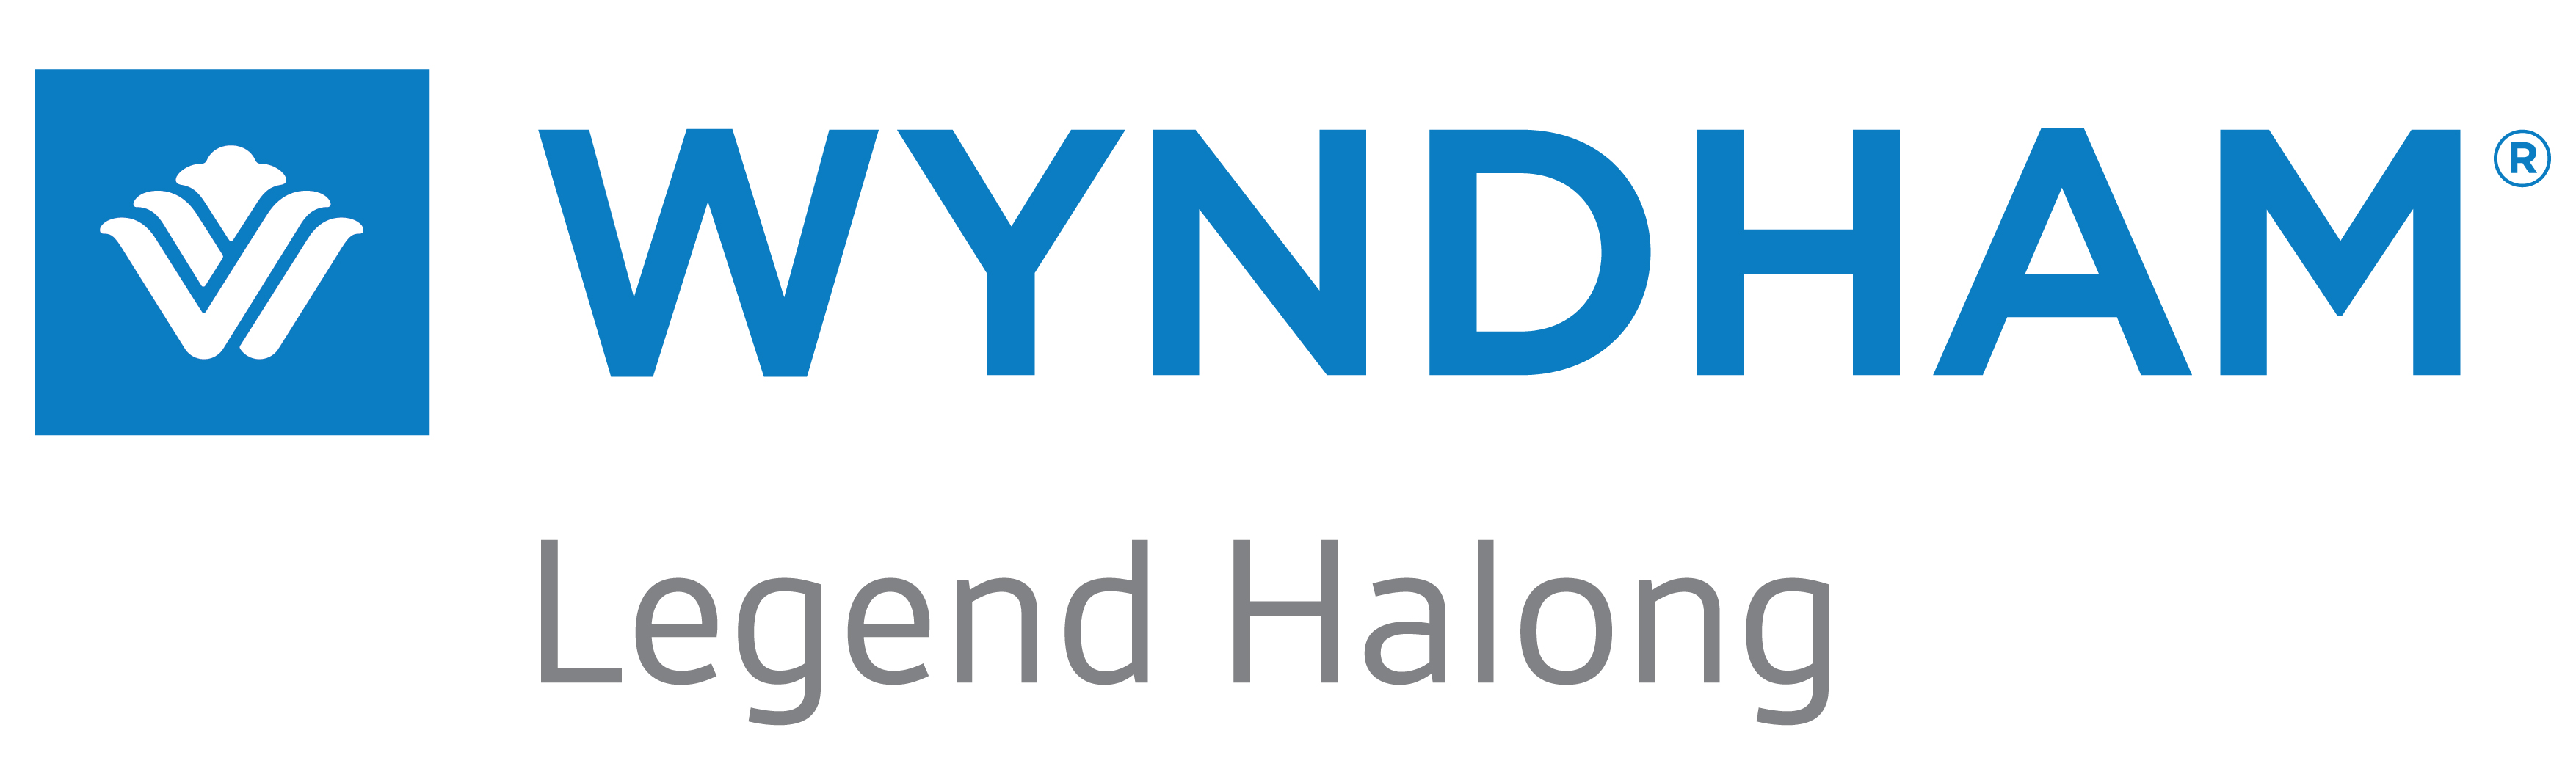 Wyndham Legend Halong